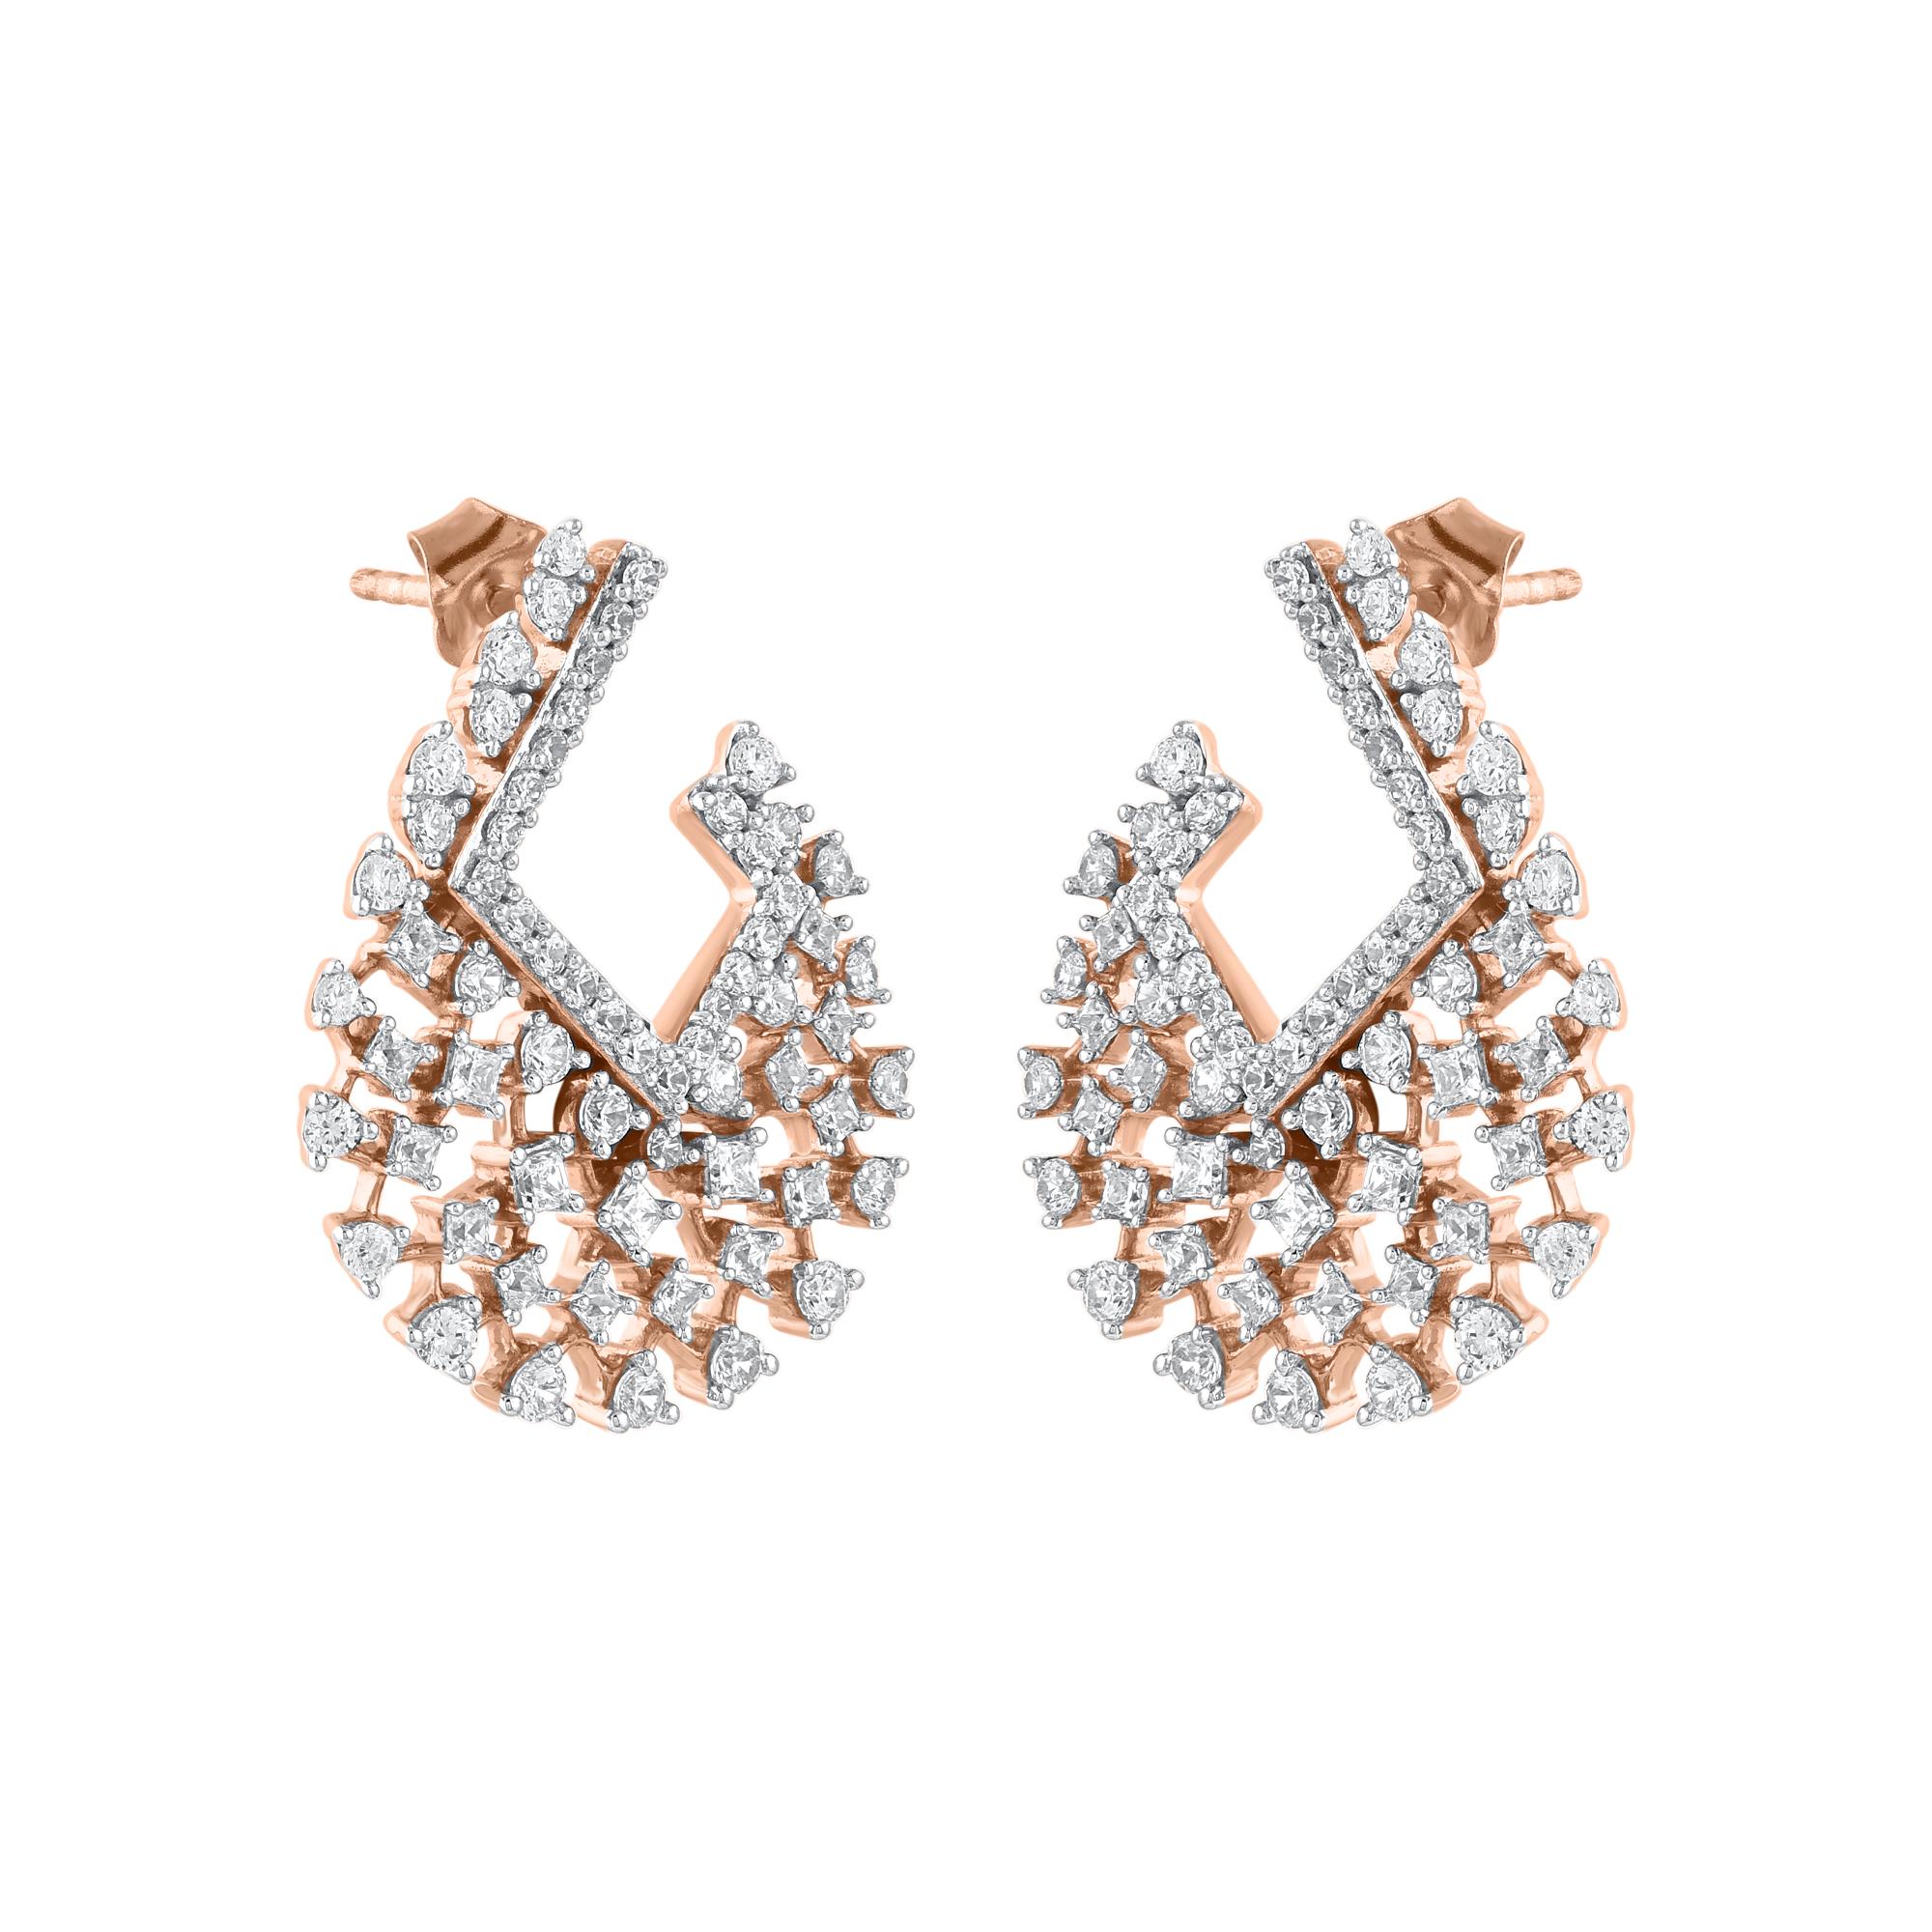 Modern TJD 2.0 Carat Natural Diamonds Designer Stud Earrings in 18 Karat Rose Gold For Sale